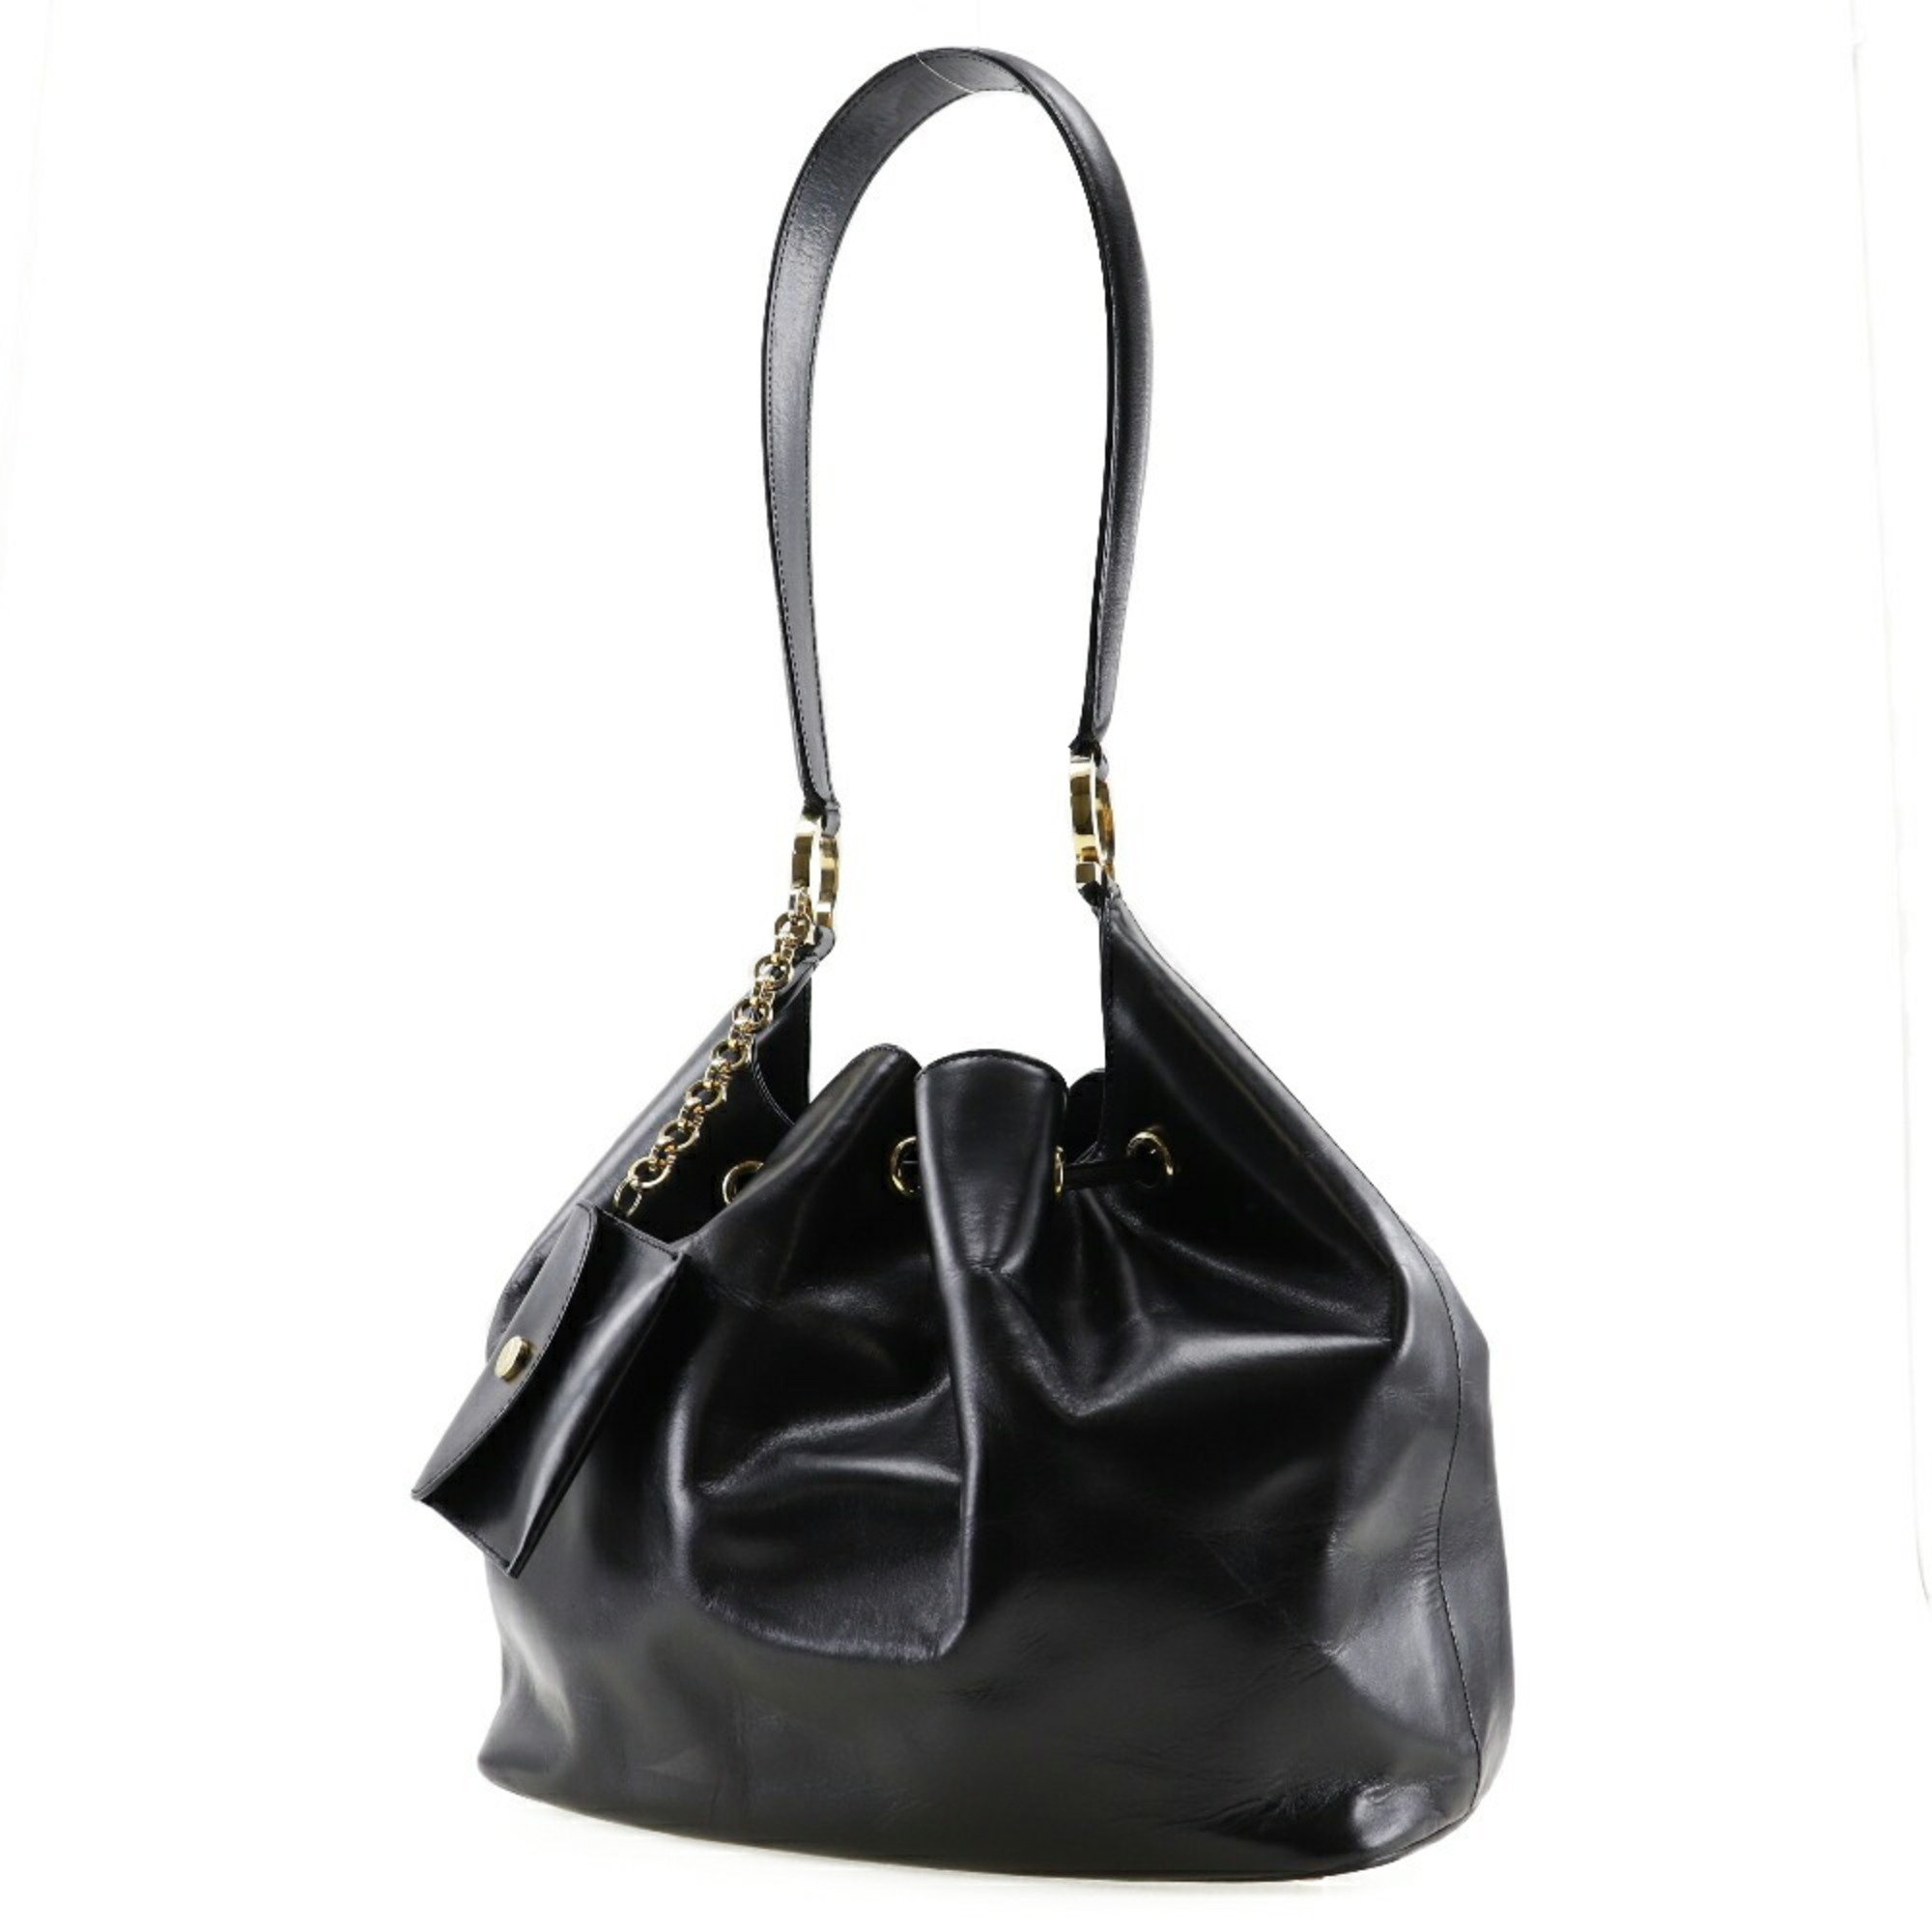 Salvatore Ferragamo One Shoulder Bag Gancini 21-7658 Leather Made in Italy Black Drawstring Belt Ladies